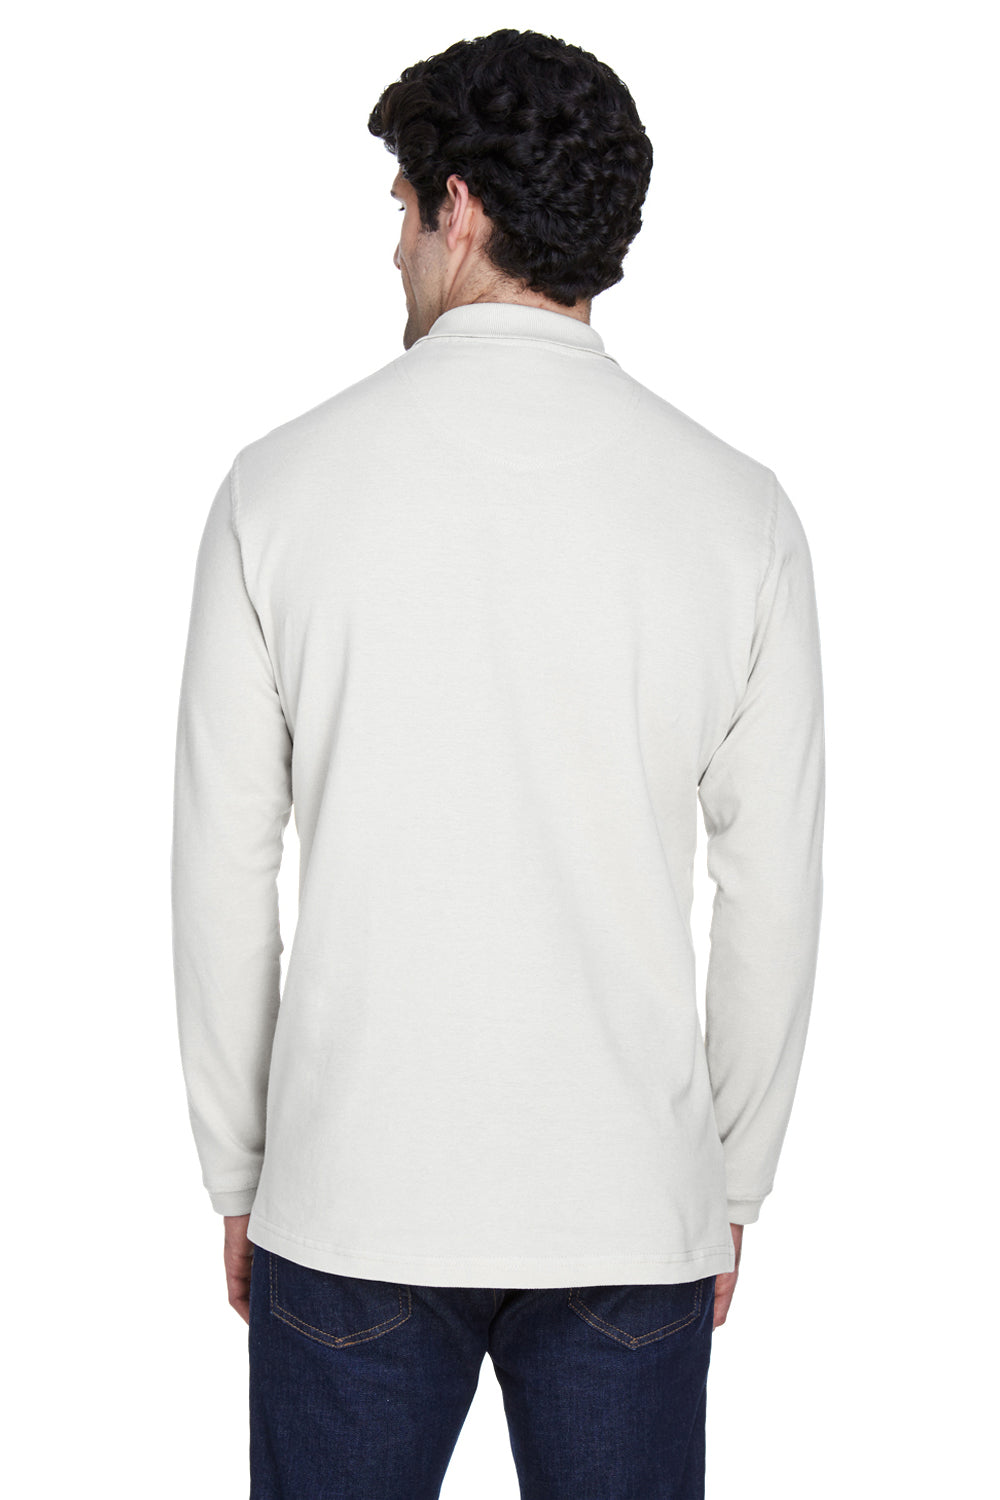 UltraClub 8532 Mens Classic Long Sleeve Polo Shirt White Back